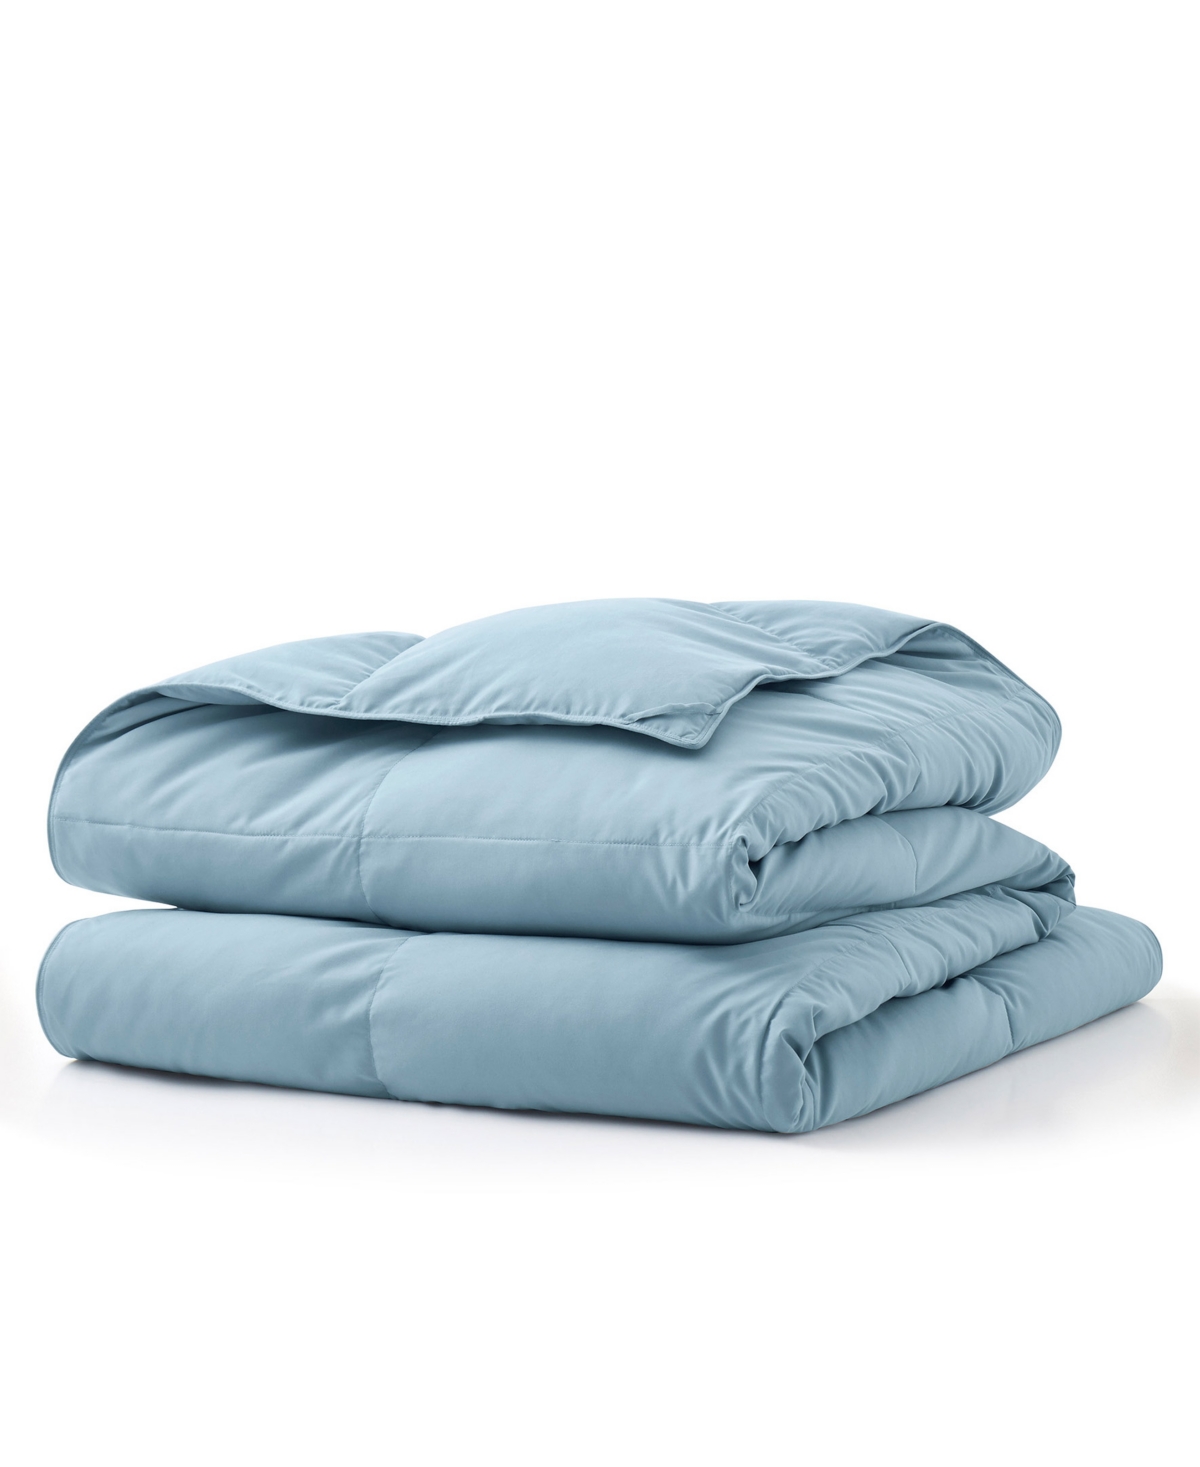 Unikome All Season 300 Thread Count Cotton Goose Down Fiber Comforter, Full/queen In Steel Blue